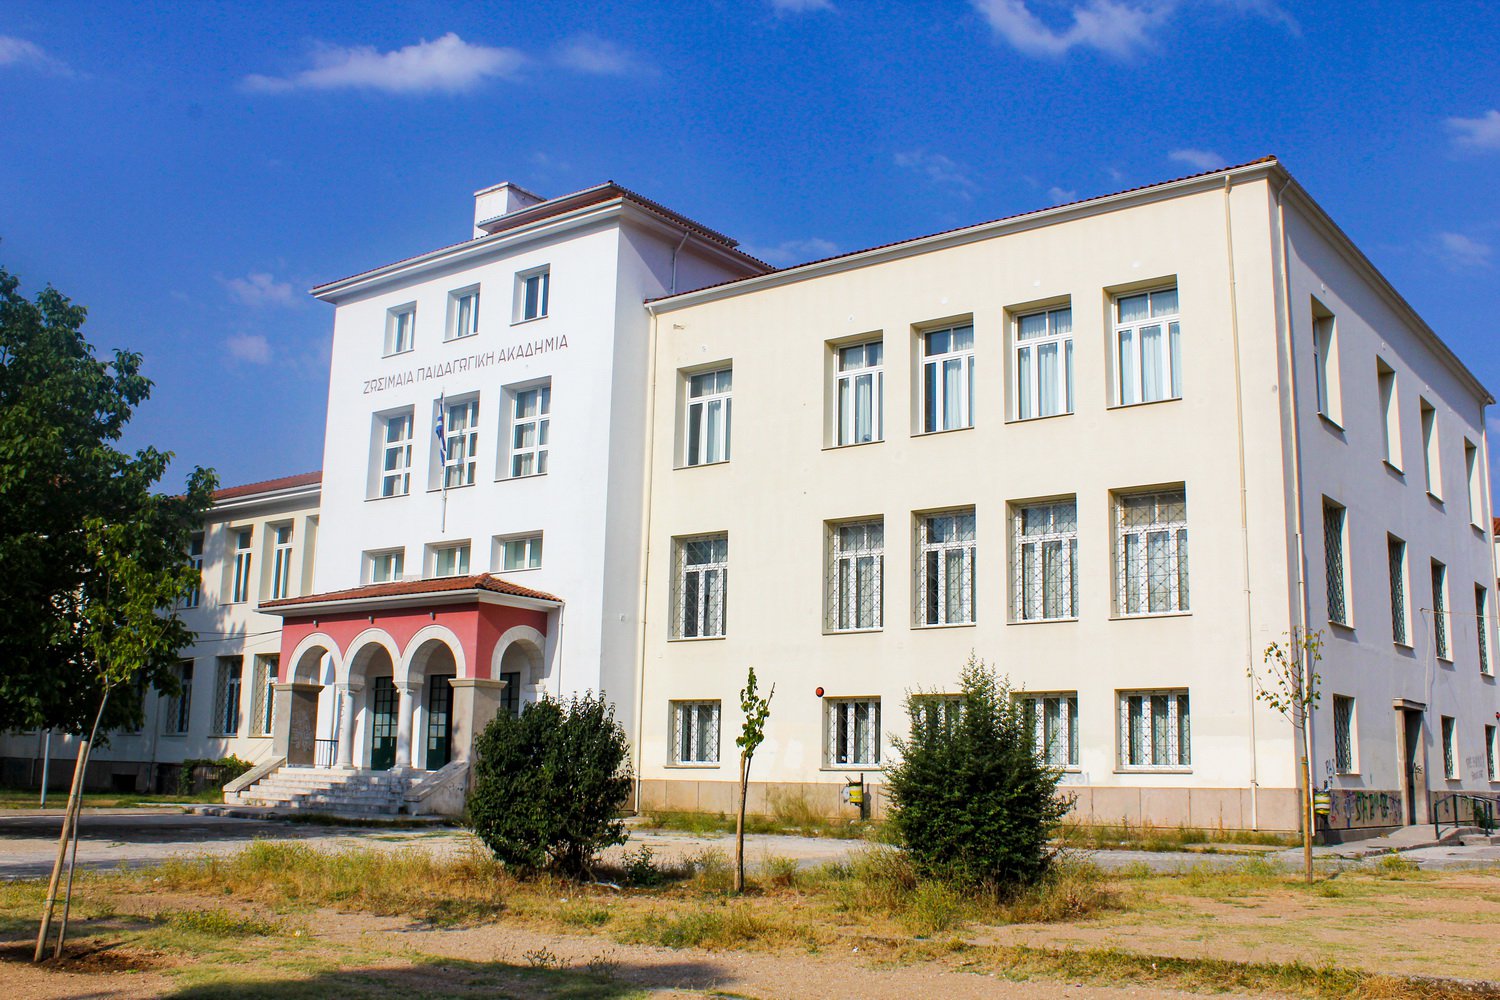 Zosimaia Paedagogical Academy